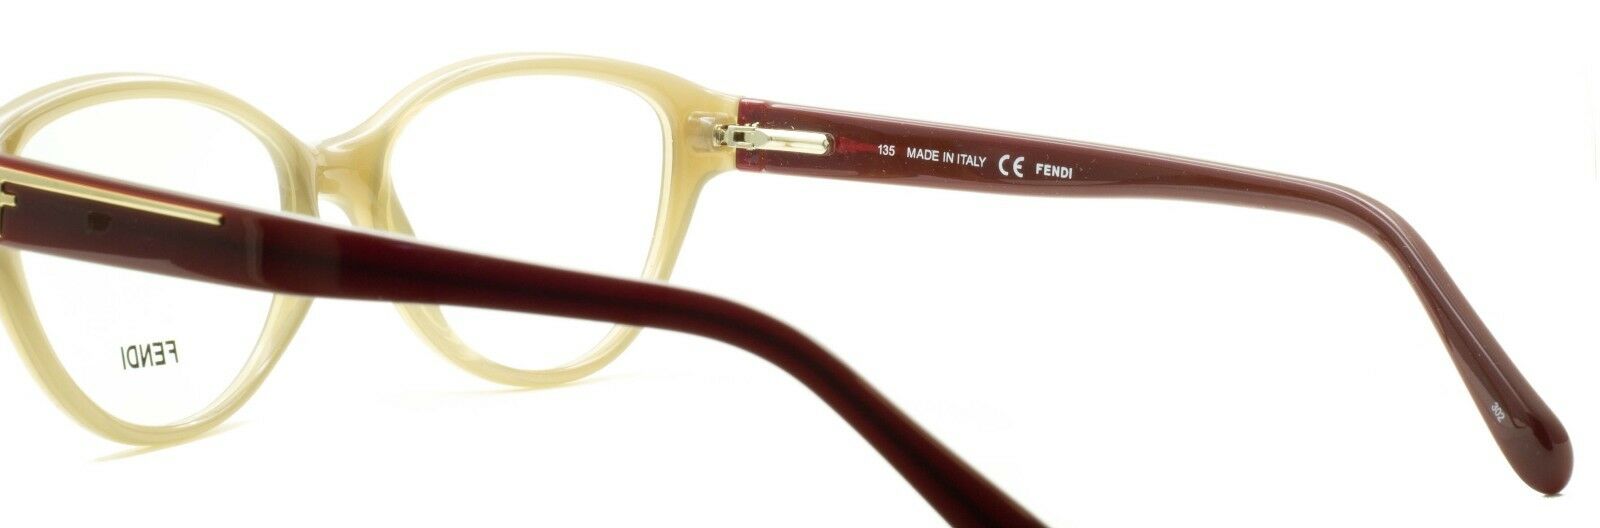 FENDI F1035 223 Eyewear RX Optical FRAMES NEW Glasses Eyeglasses Italy - BNIB